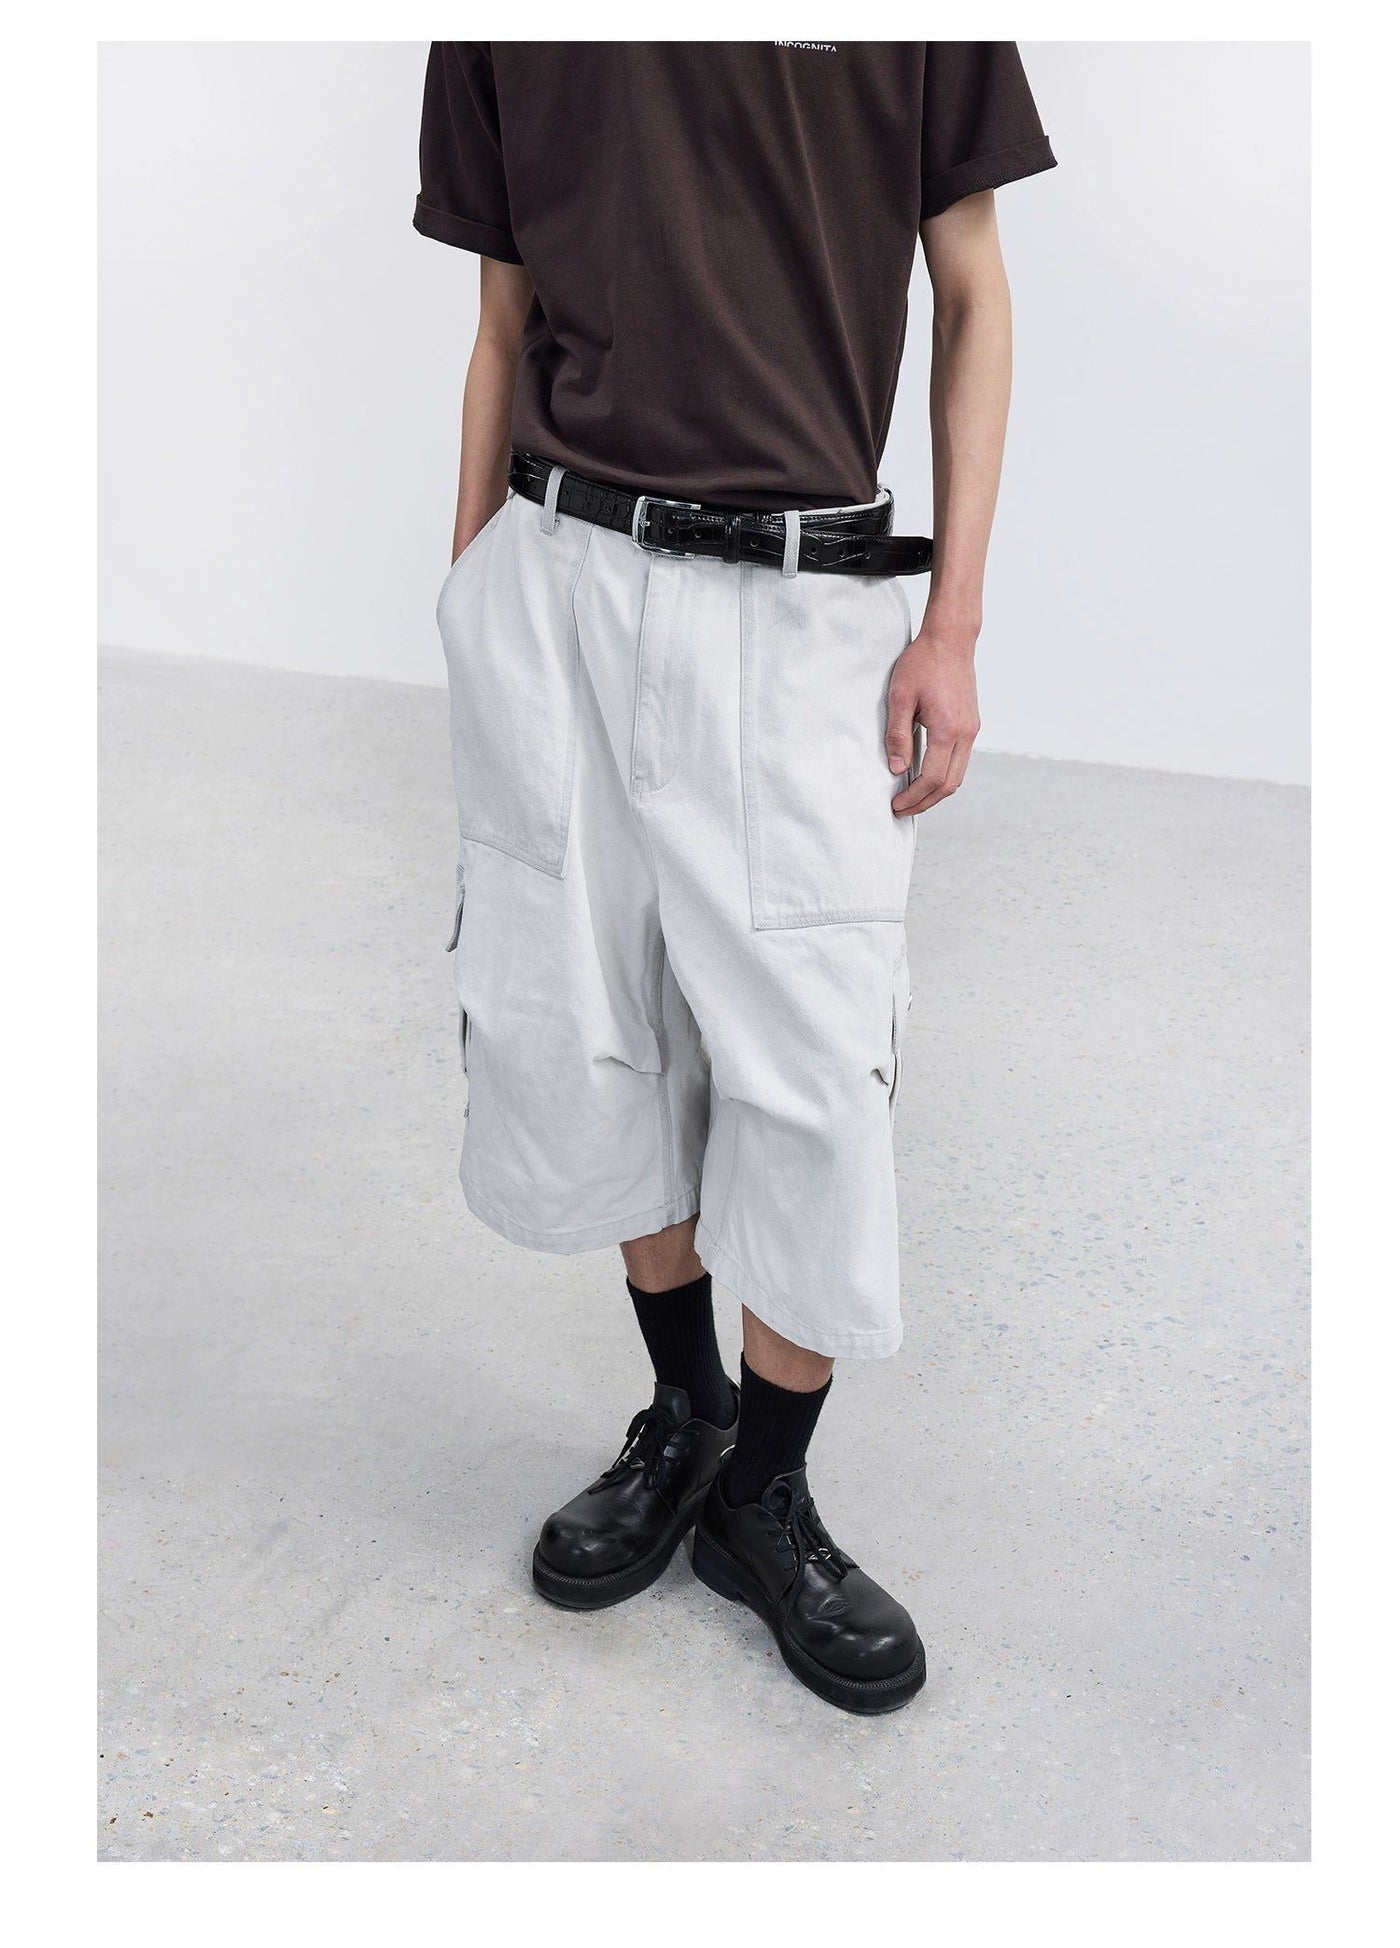 Wide Pockets Denim Shorts Korean Street Fashion Shorts By Terra Incognita Shop Online at OH Vault